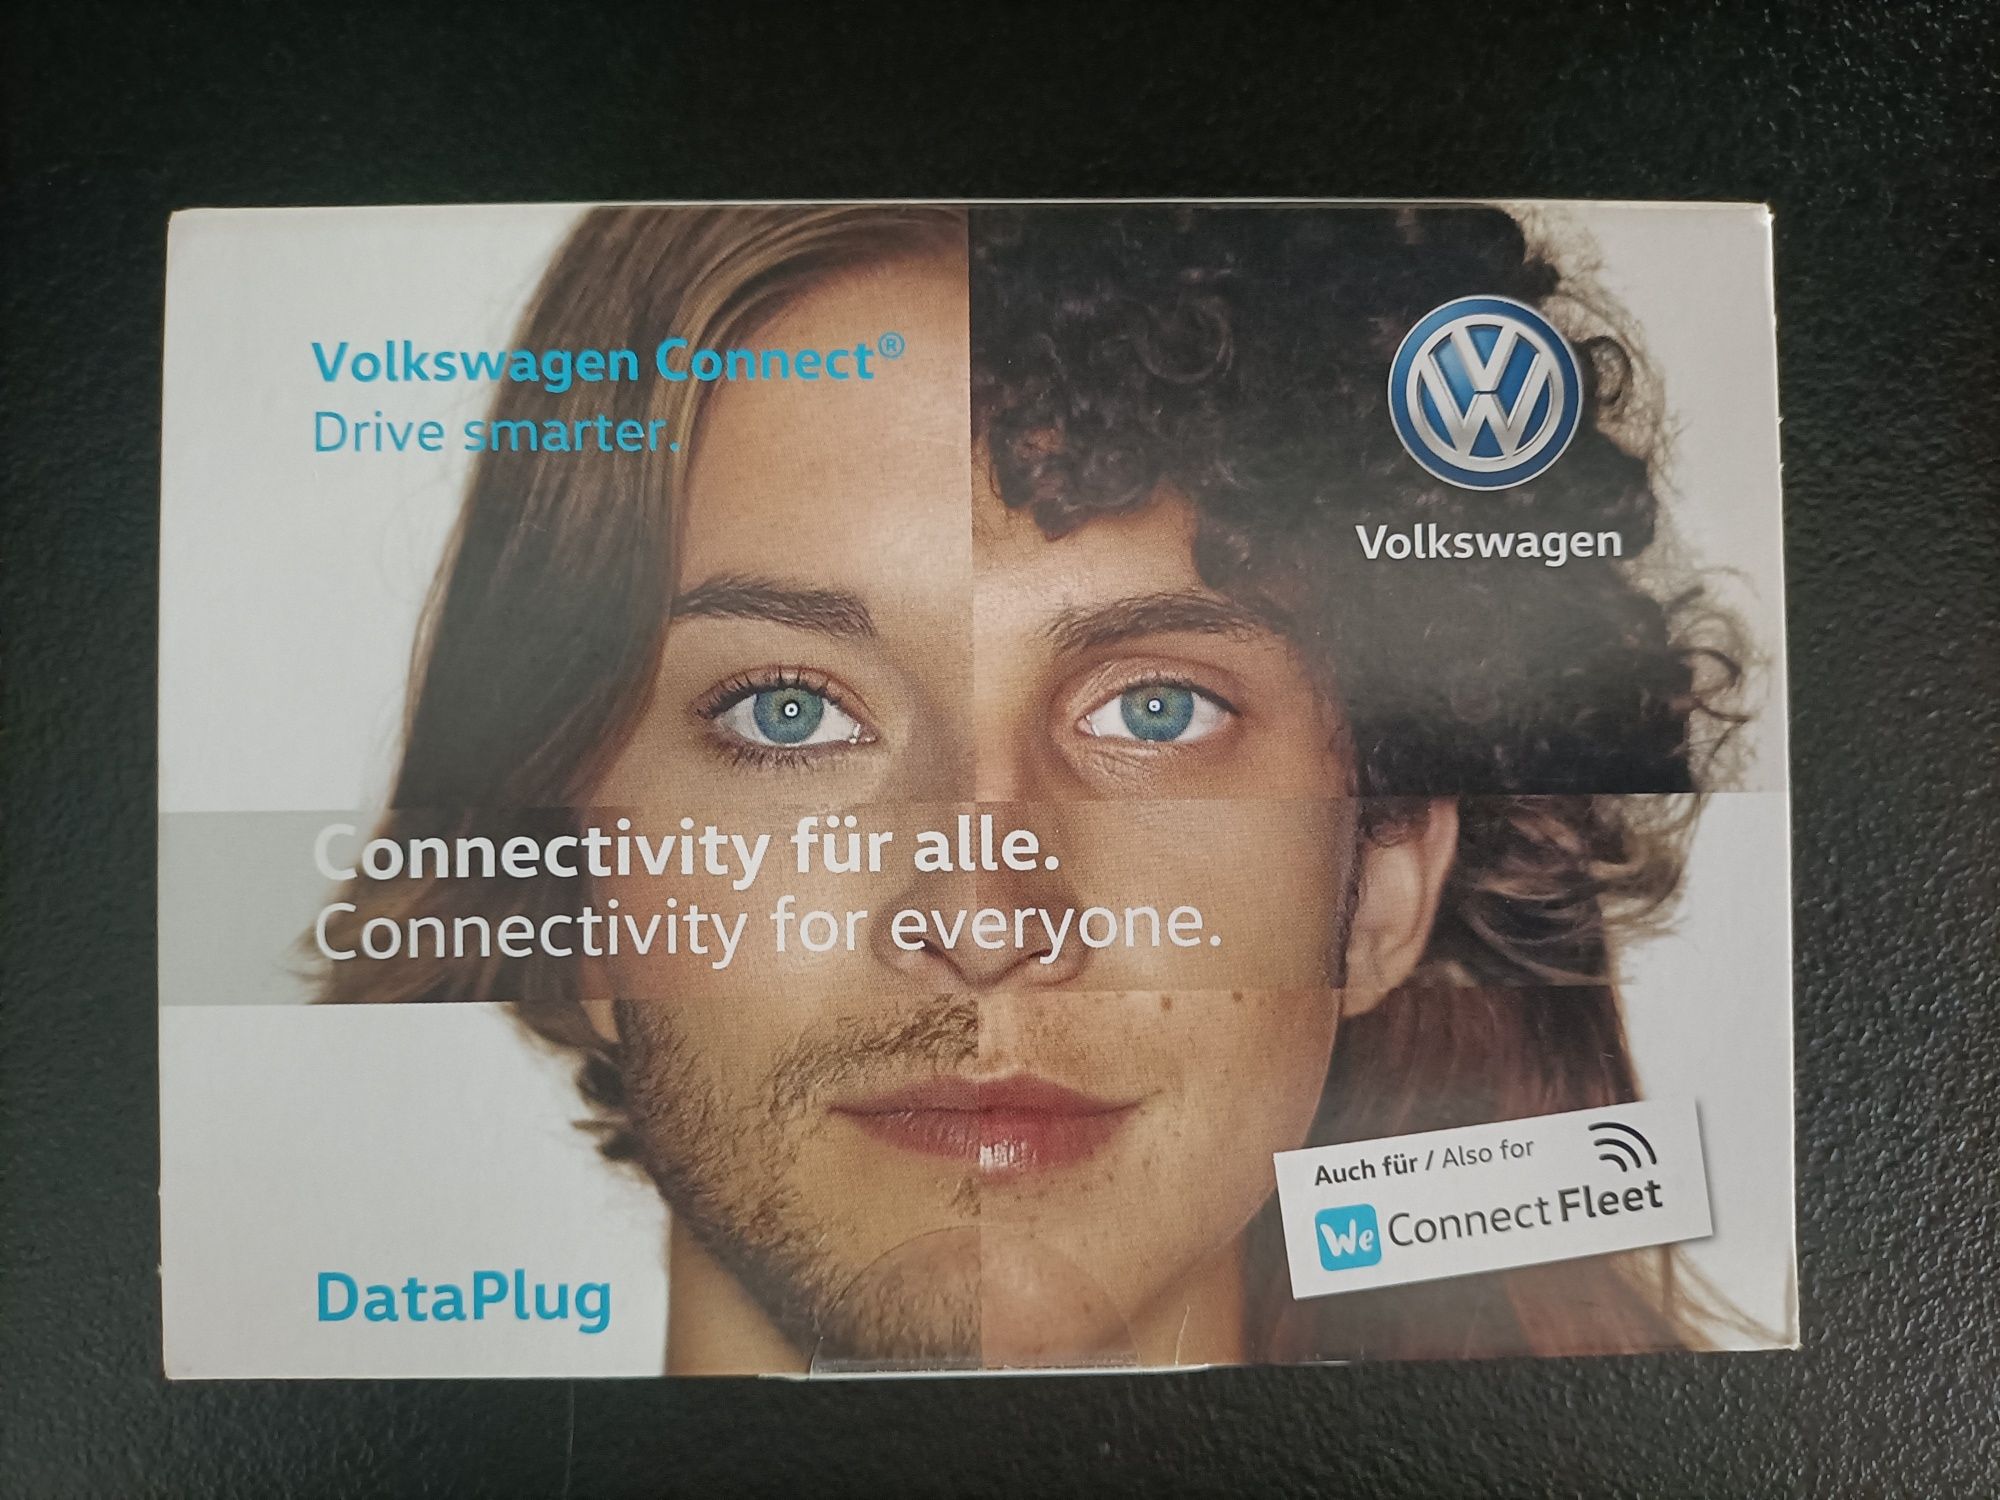 DataPlug Volkswagen Connect Driver smarter